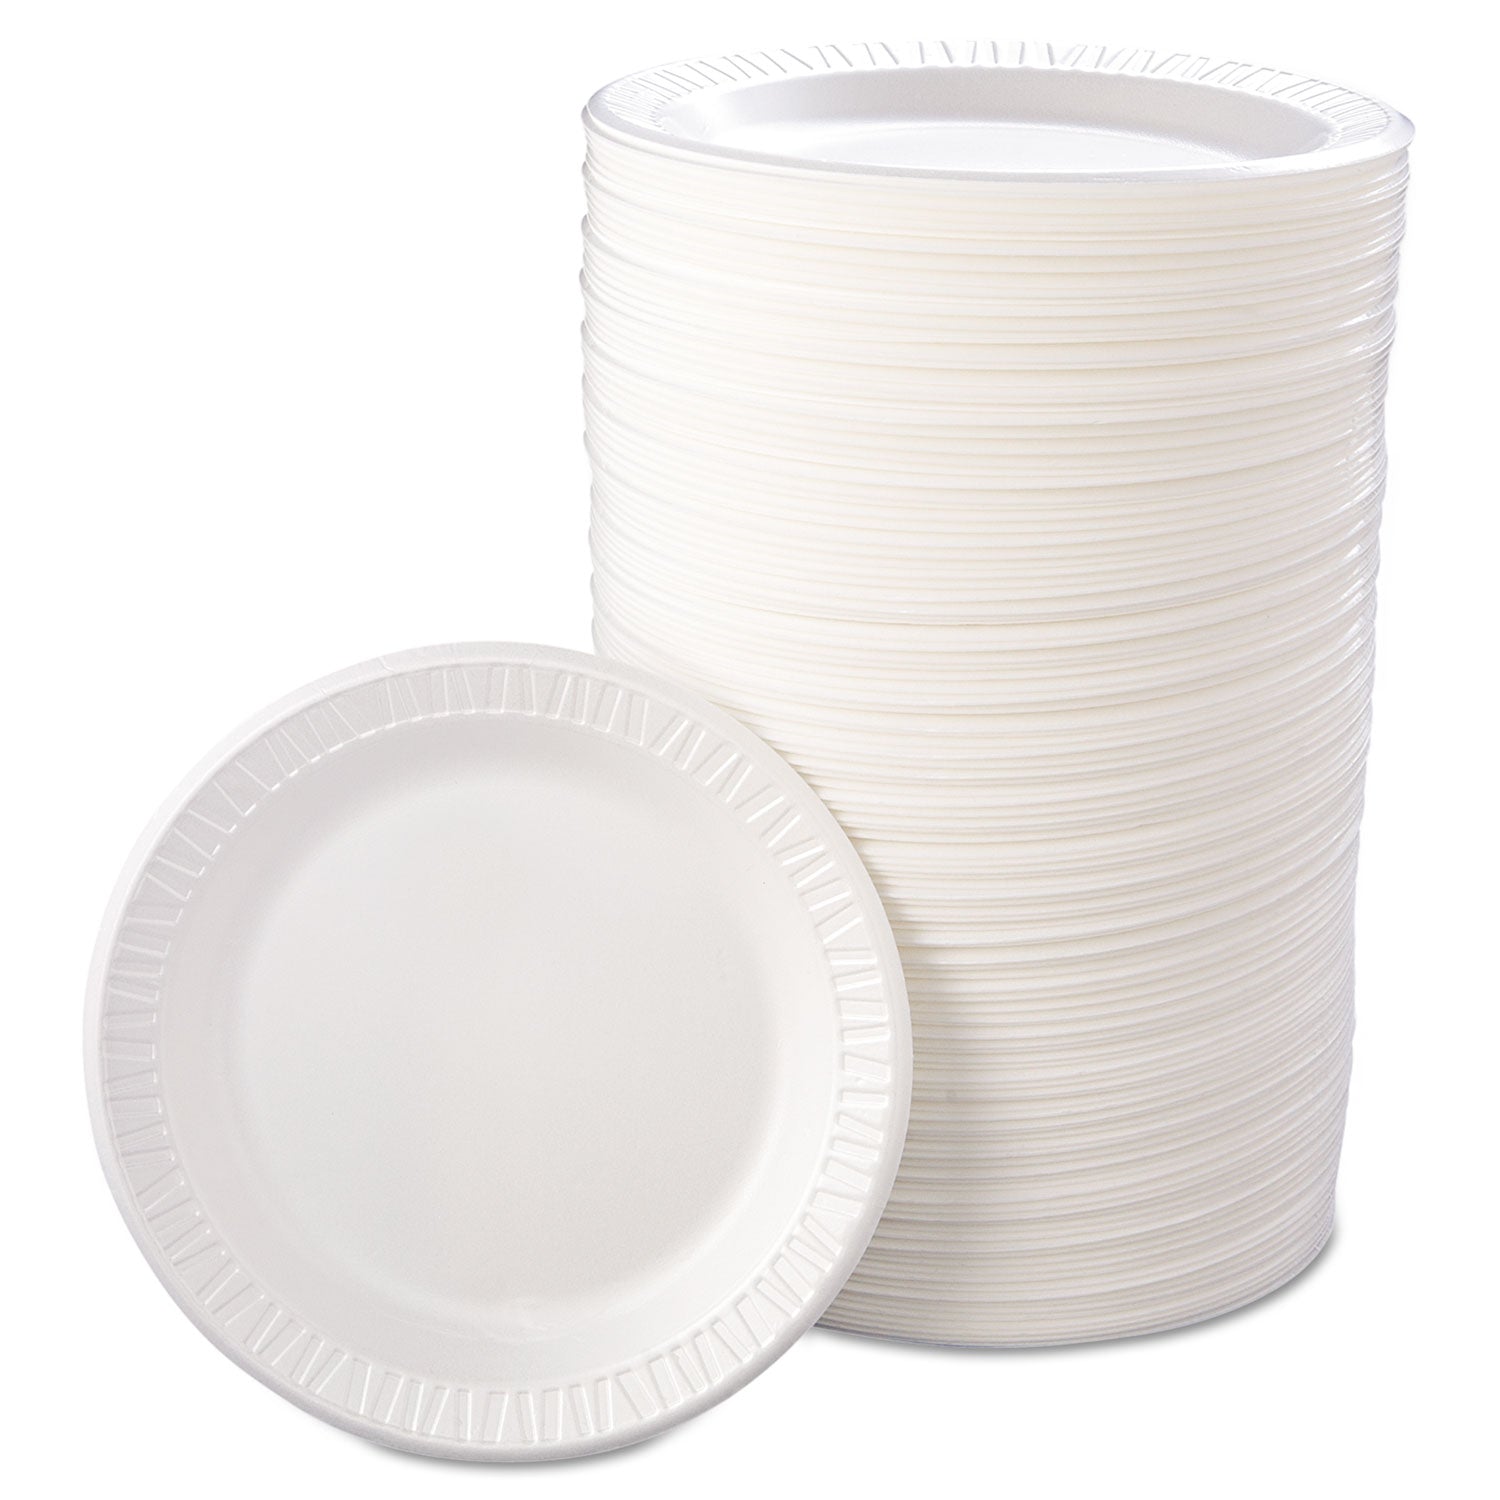 Quiet Classic Laminated Foam Dinnerware, Plate, 9" dia, White, 125/Pack, 4 Packs/Carton - 